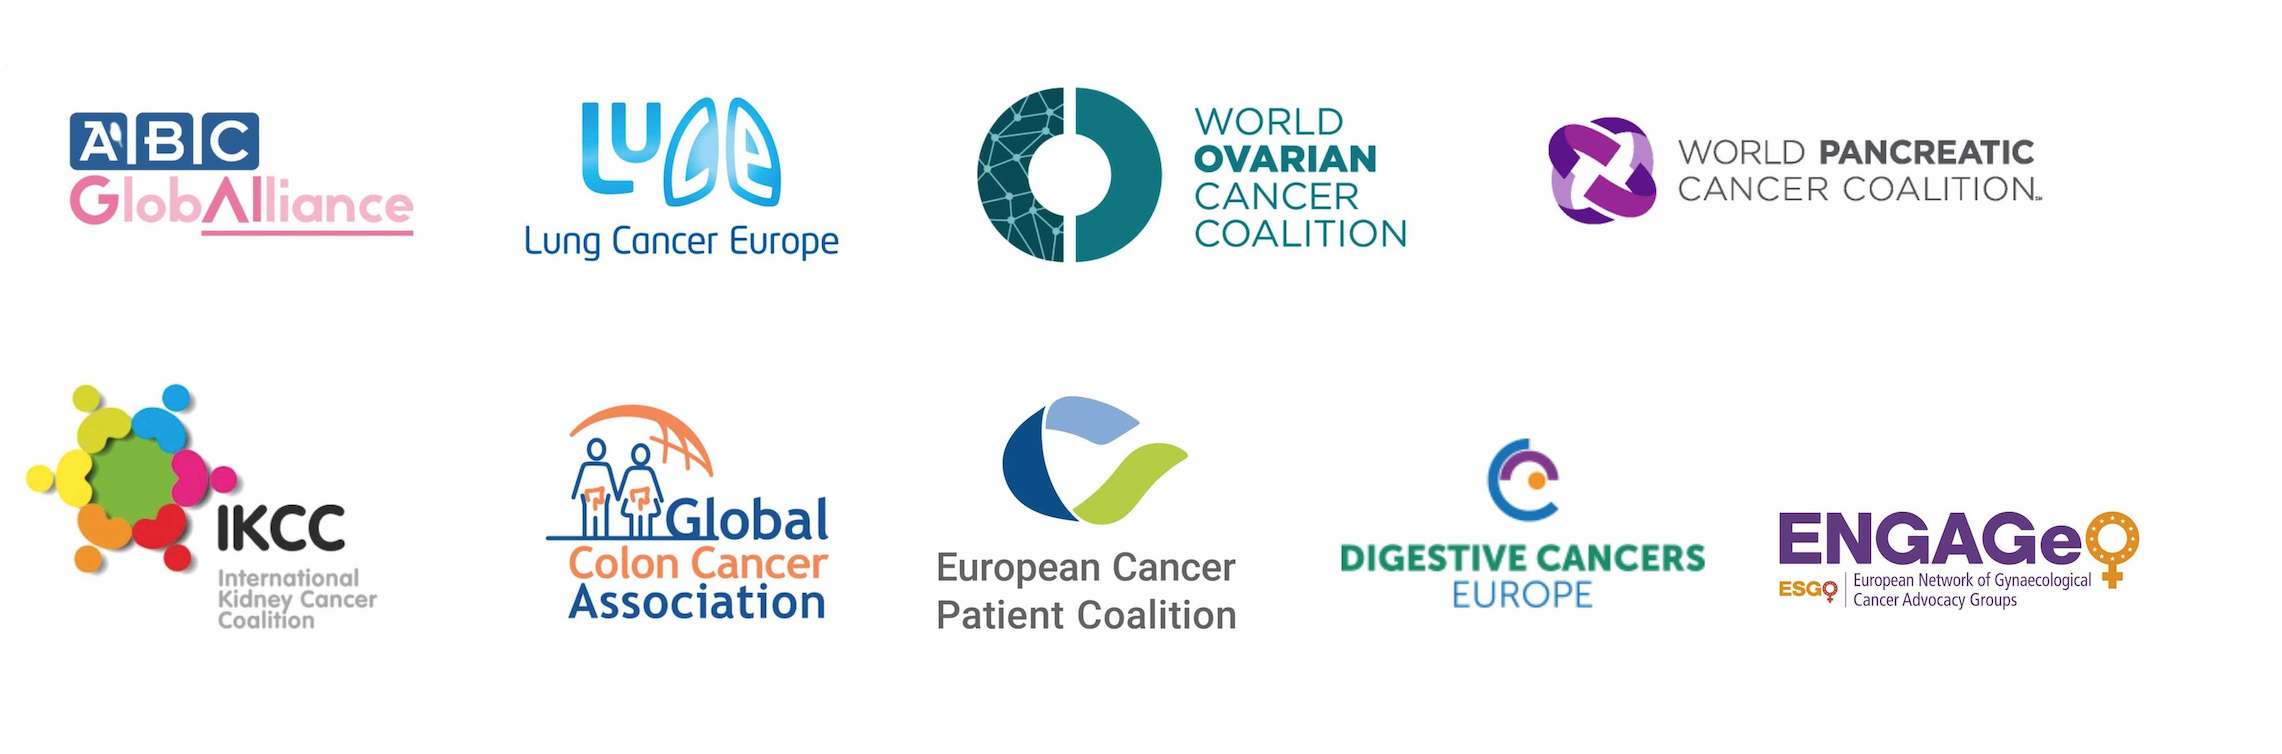 NNSC_Partners-Global联盟, Lung cancer Europe, Word ovarian, Word pancreatic, IKKC, 全球硬币癌症协会, 欧洲癌症患者, Digestive cancer, ENGAGe